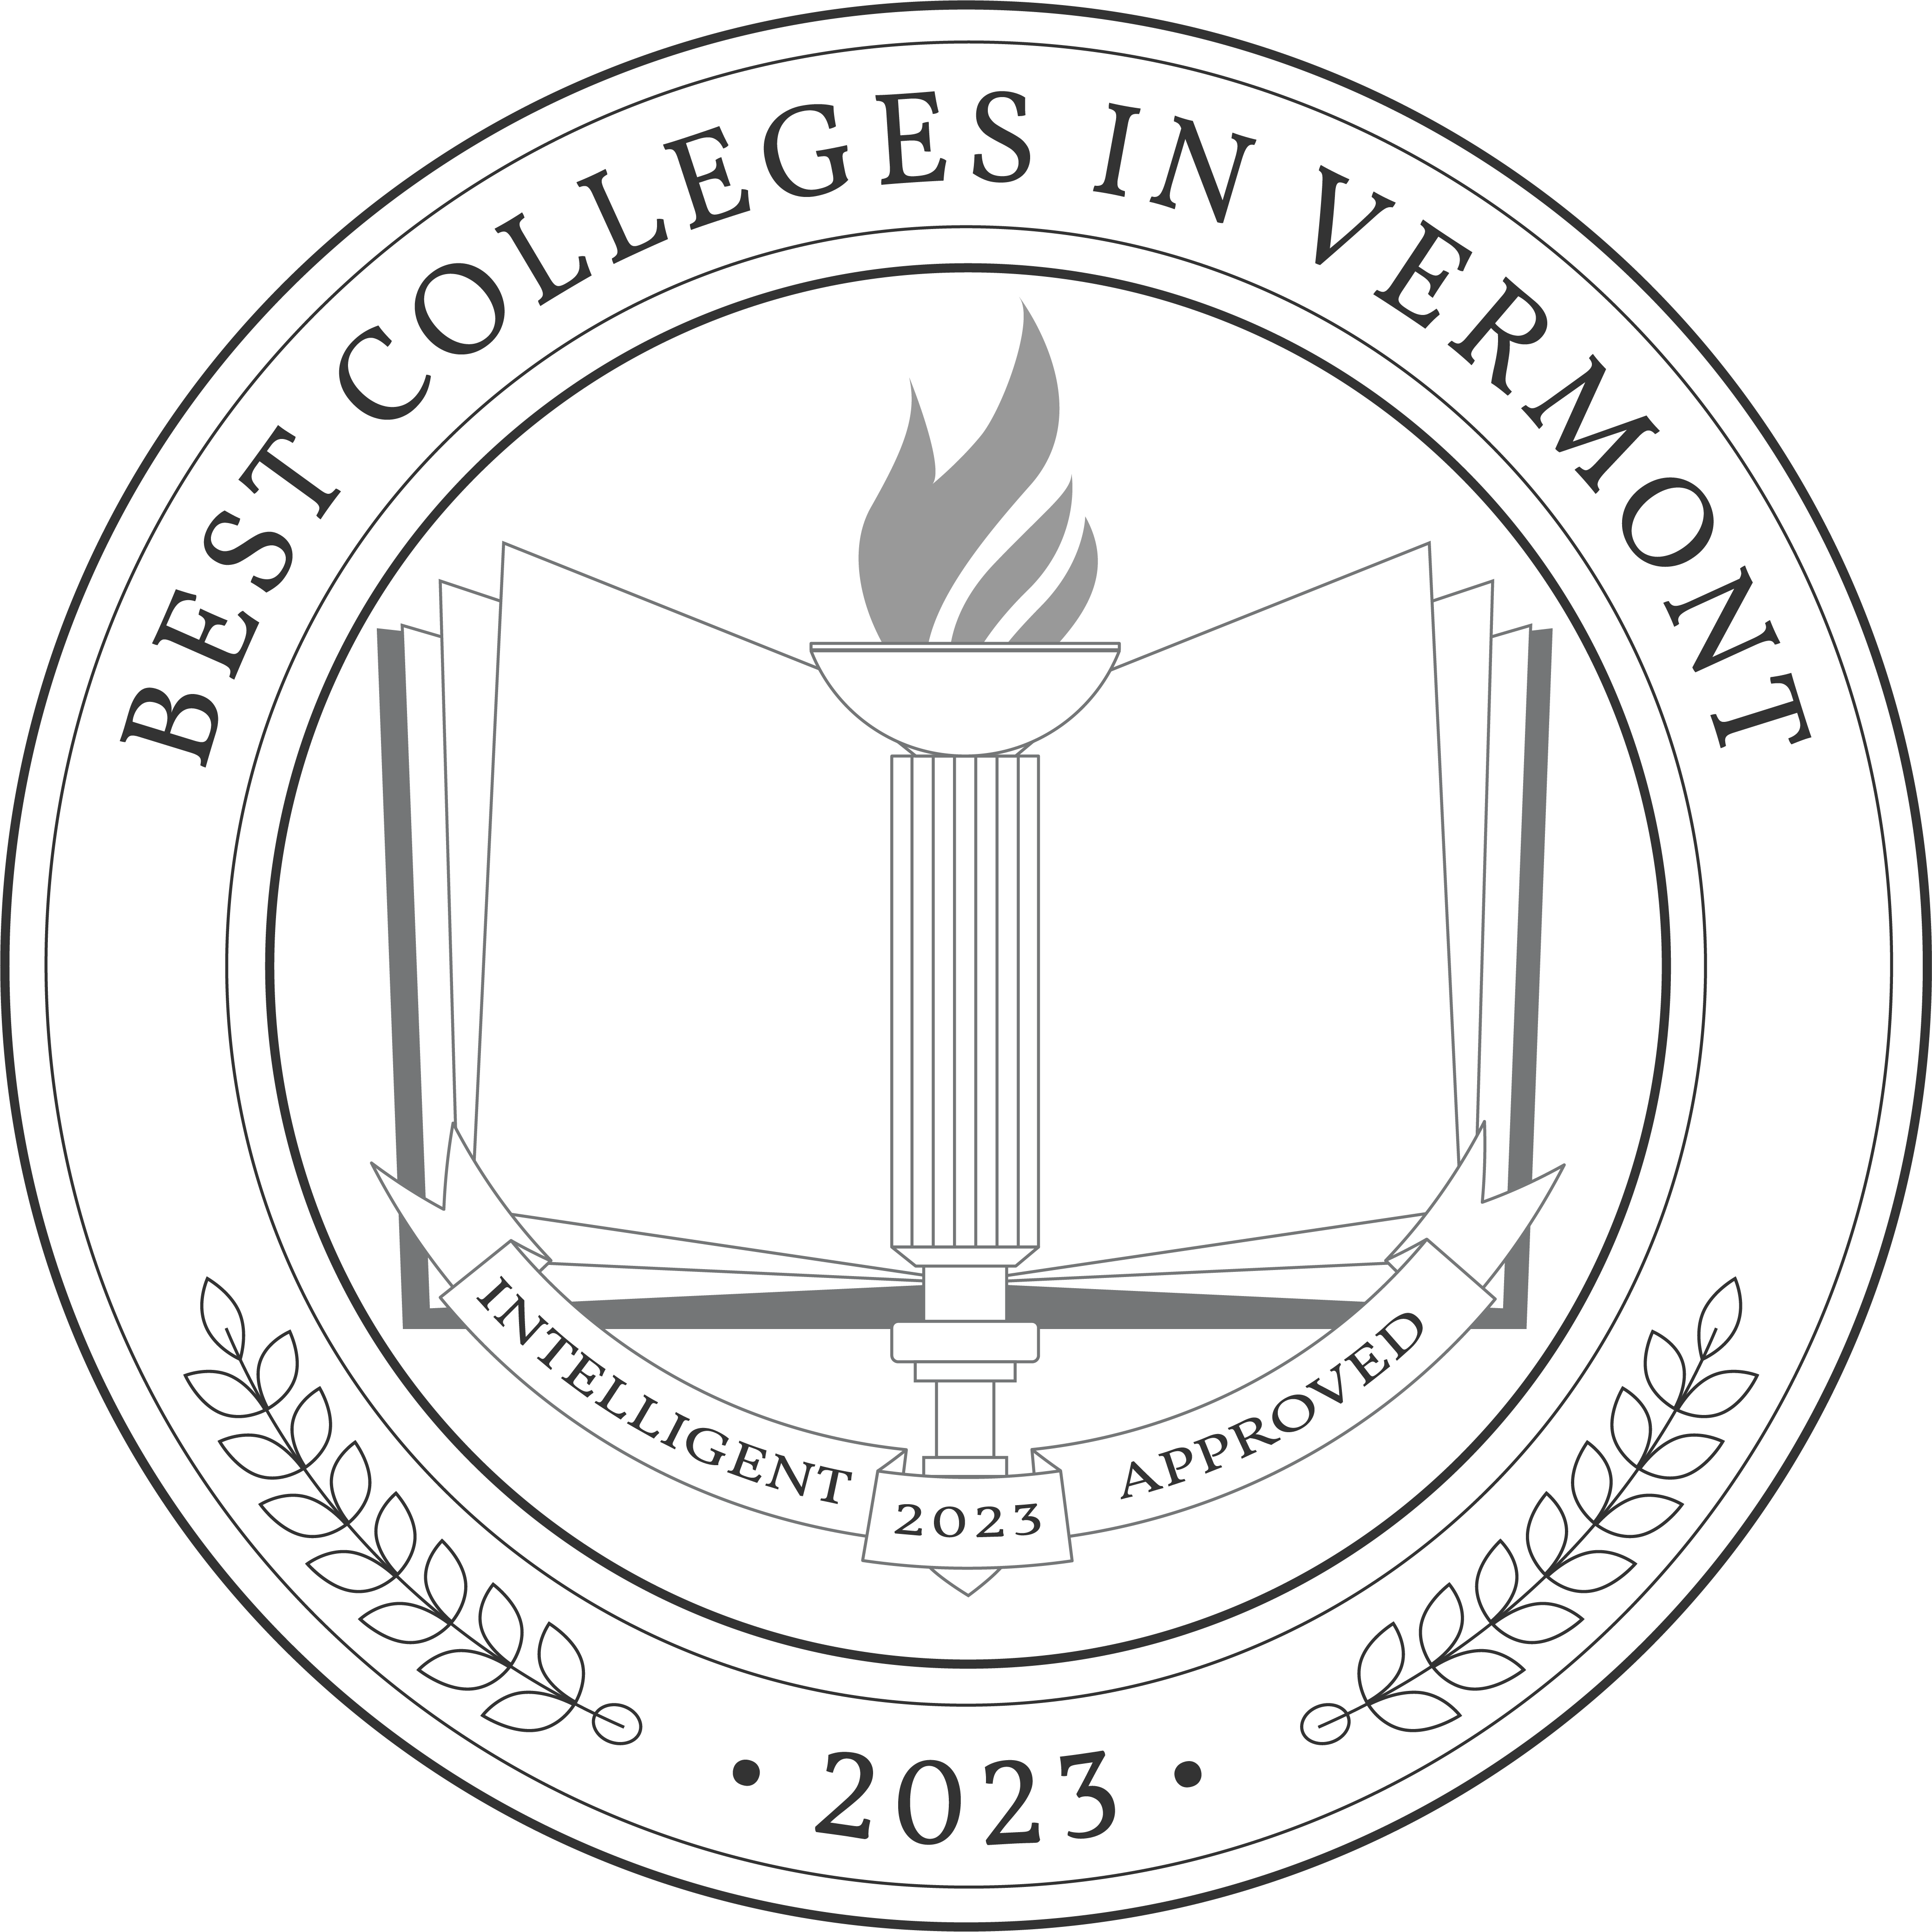 Best Colleges in Vermont 2023 Badge